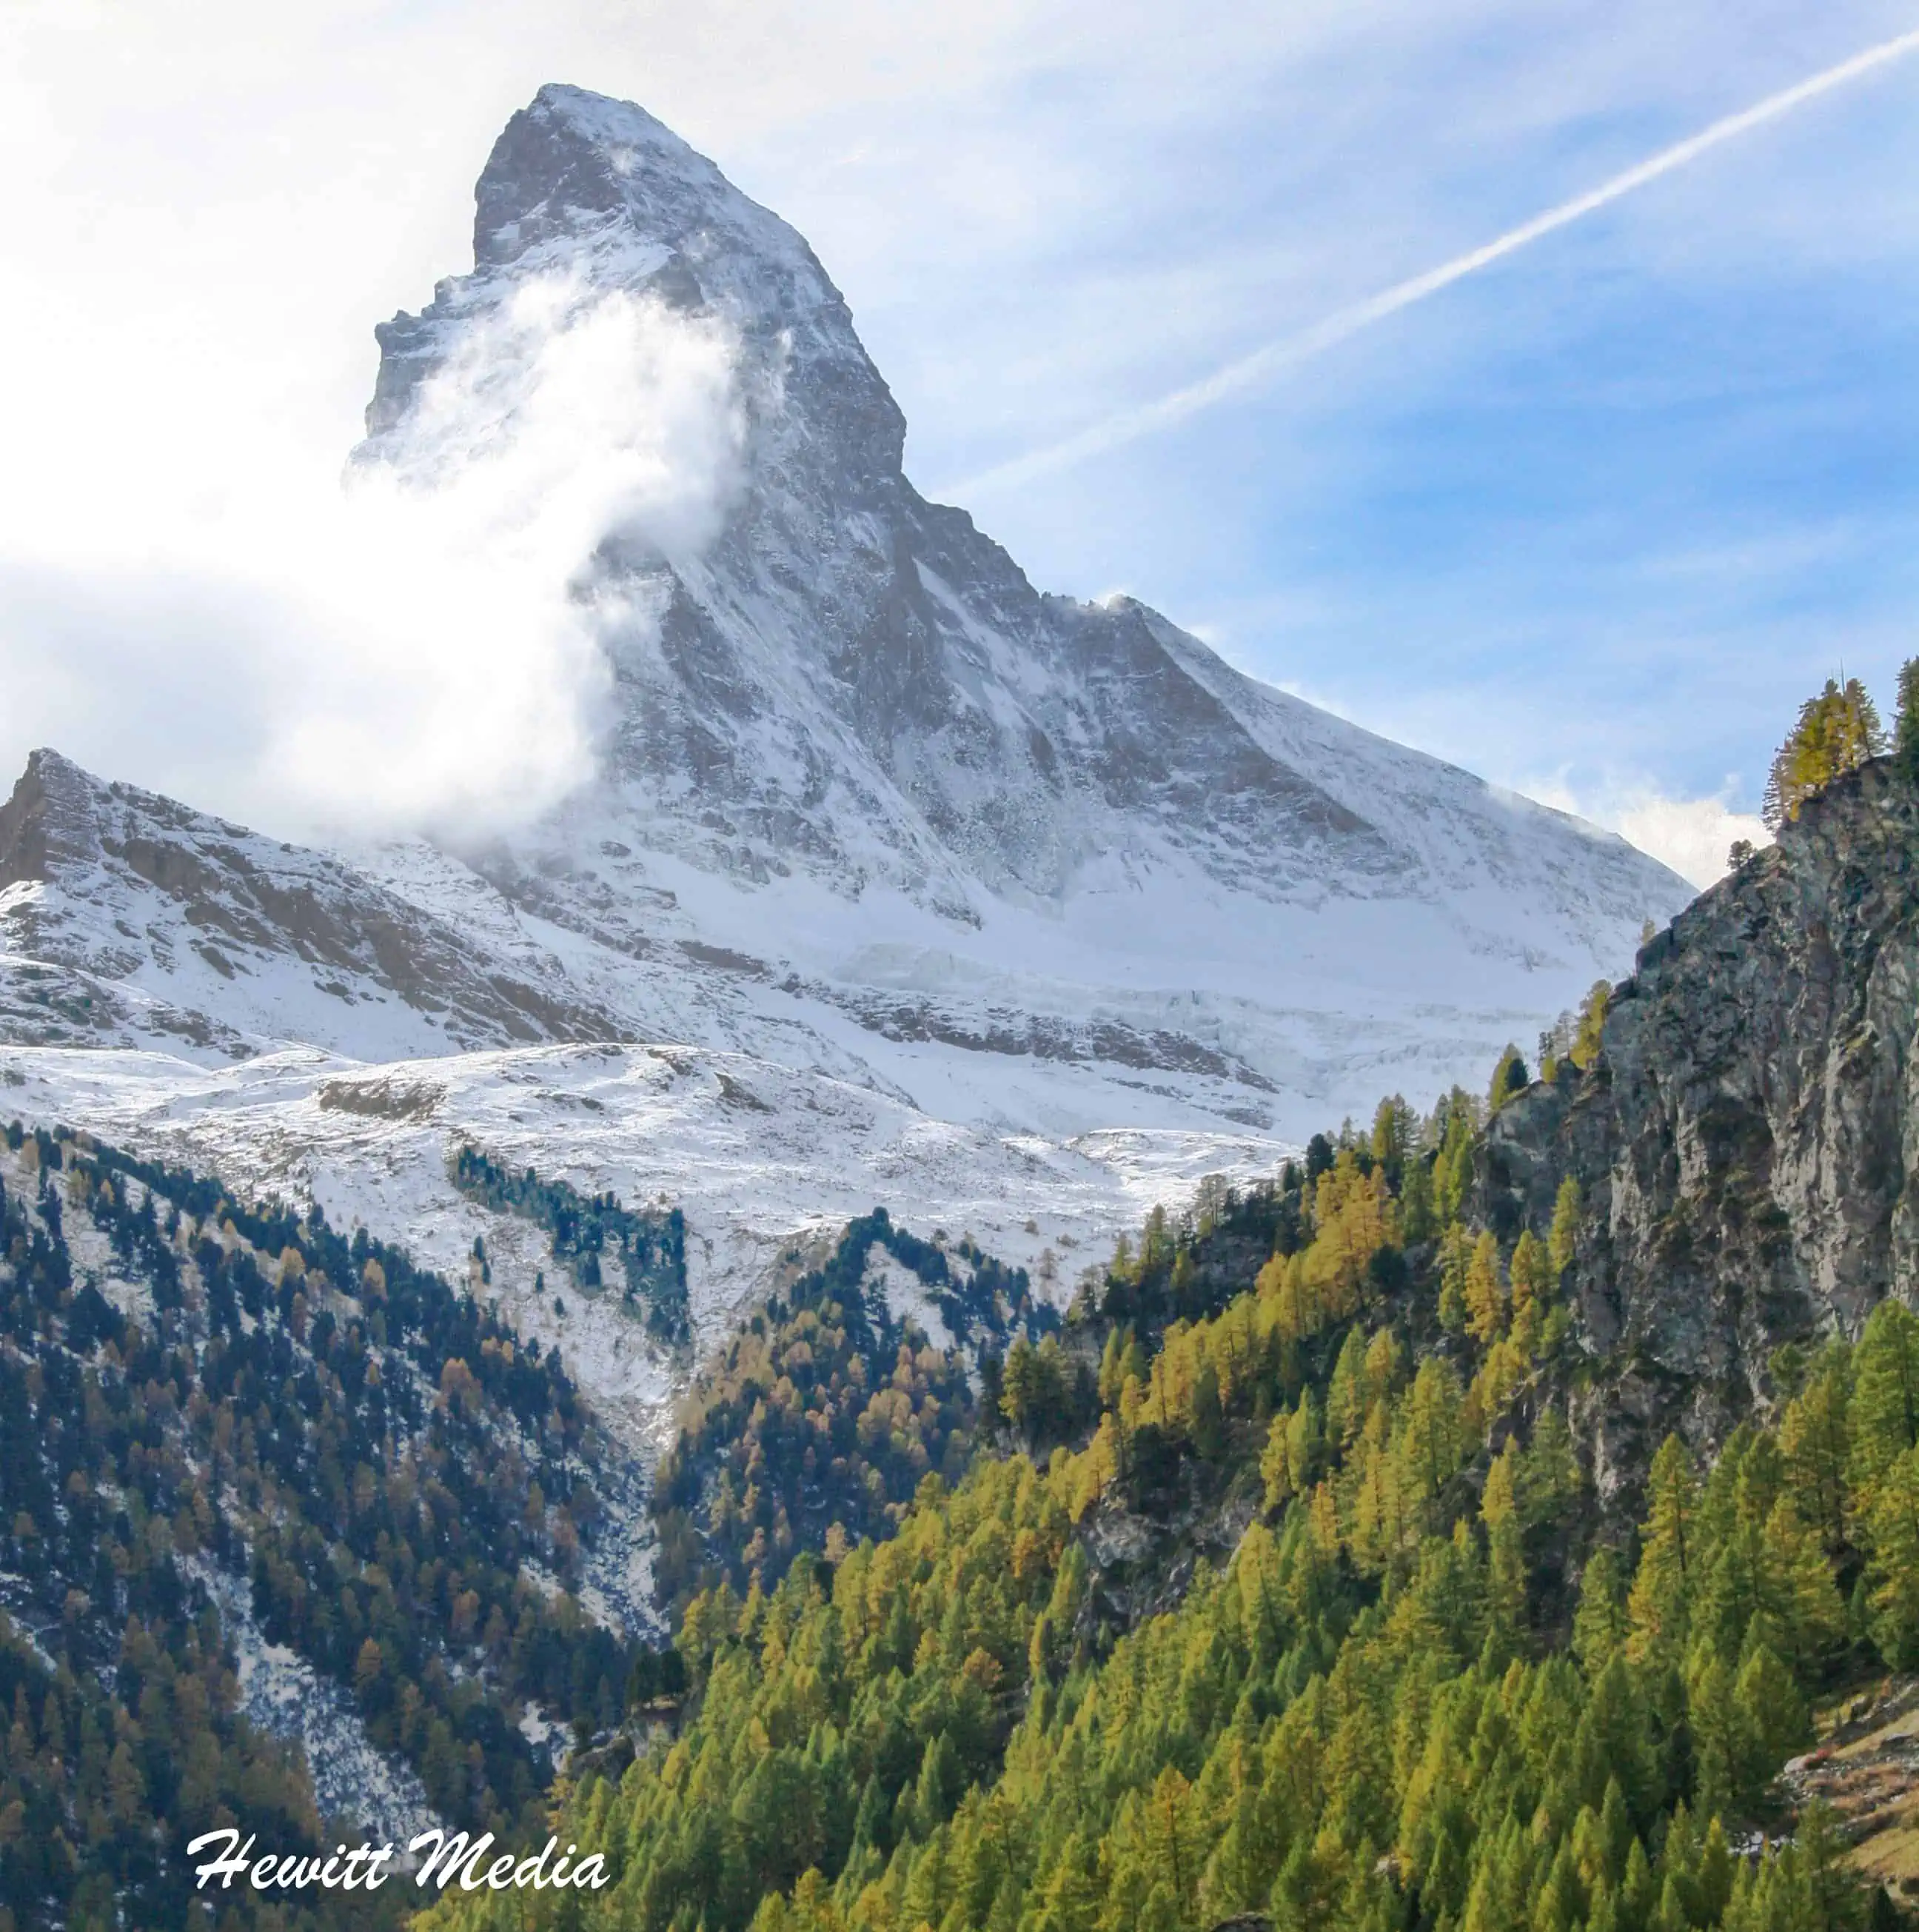 Instagram Travel Photography:  The Amazing Matterhorn